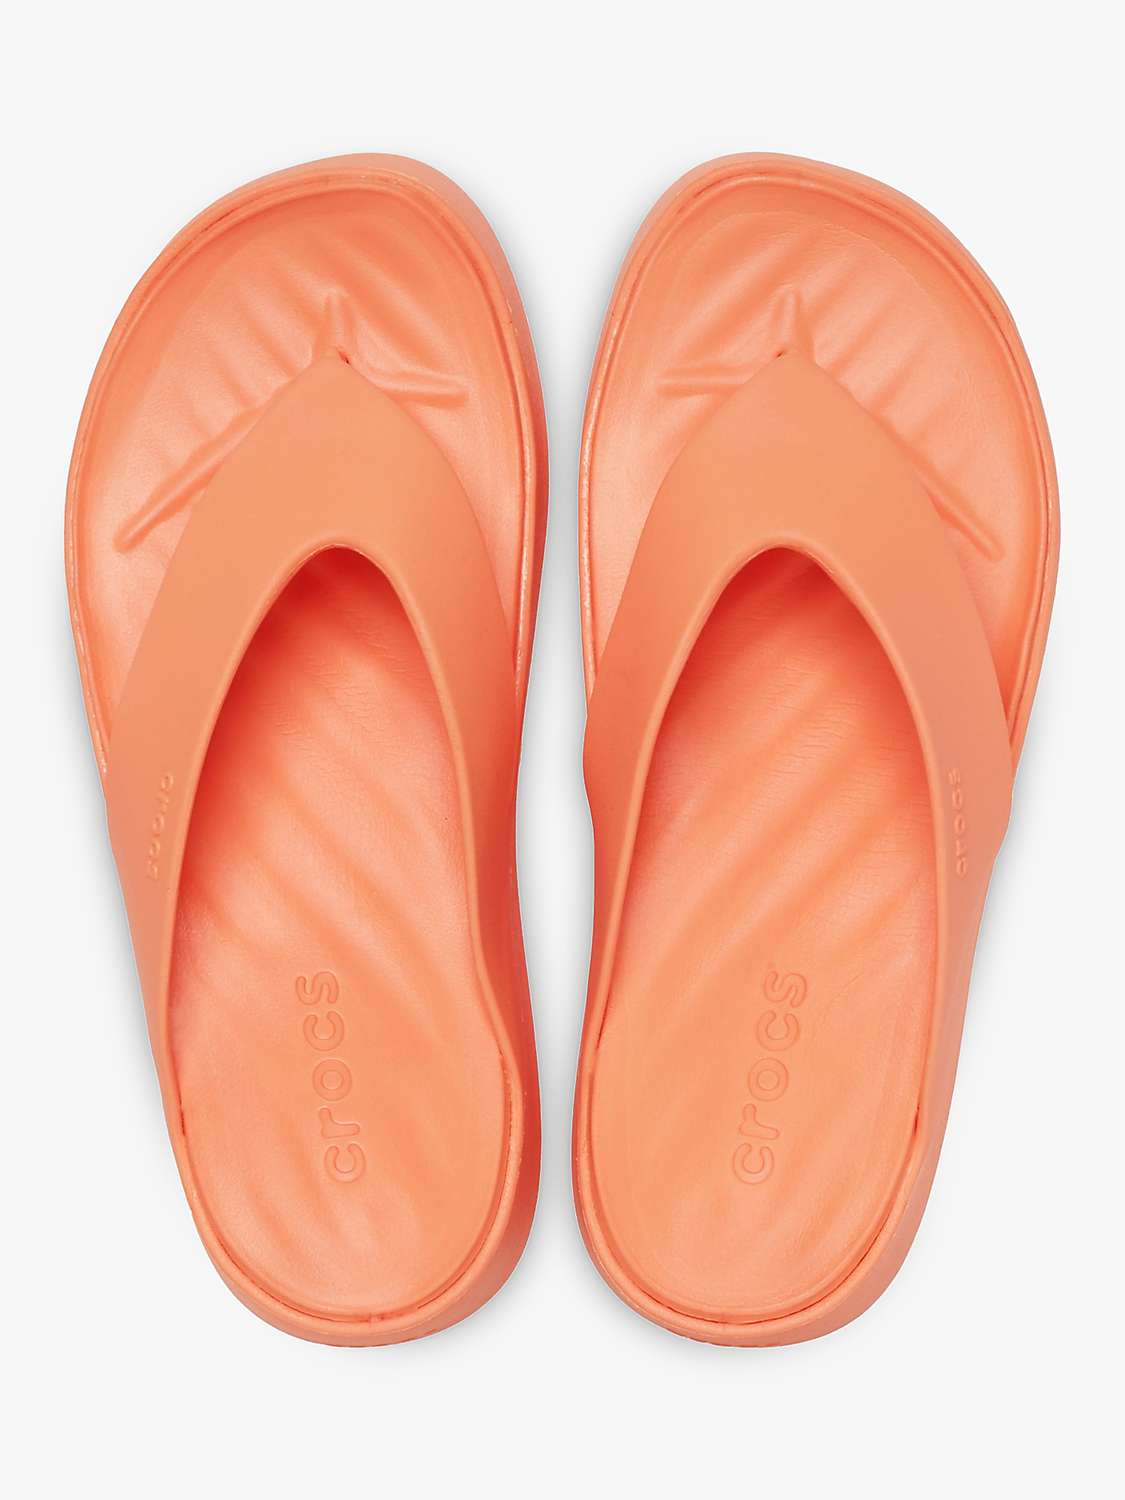 Buy Crocs Getaway Platform Flip Flops, Light Peach Online at johnlewis.com